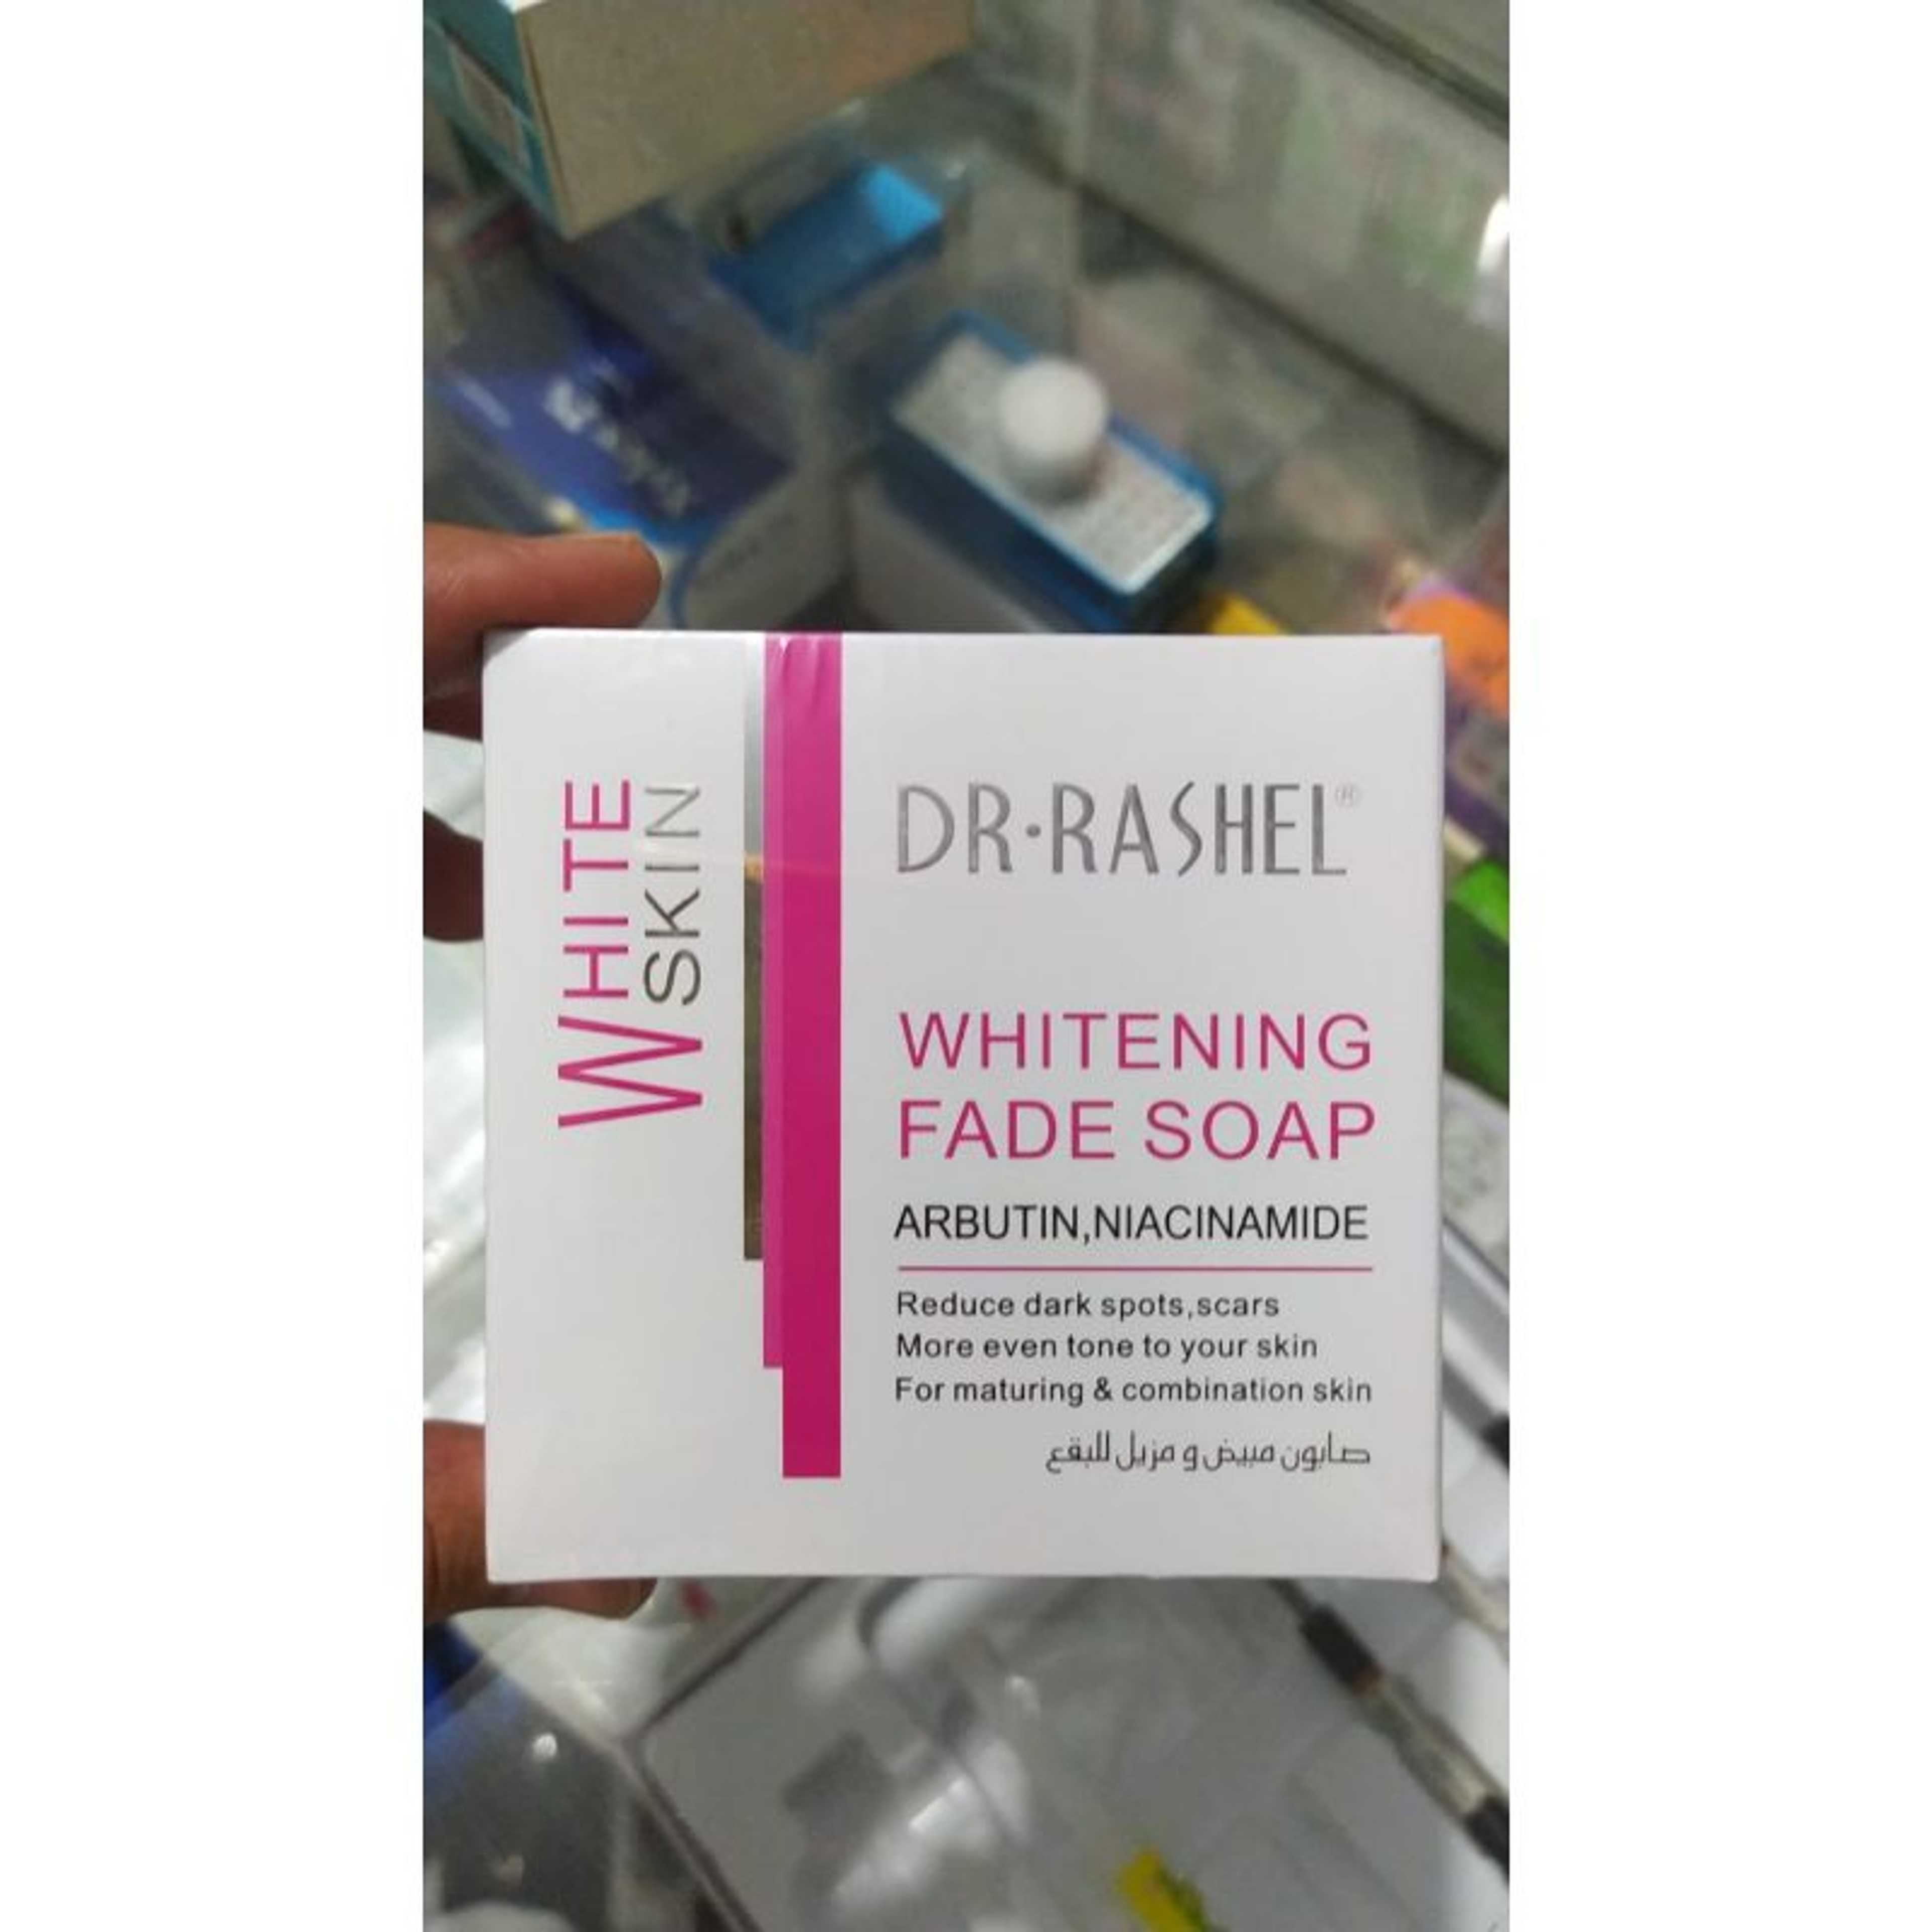 DR.RASHEL WHITENING FADE SOAP